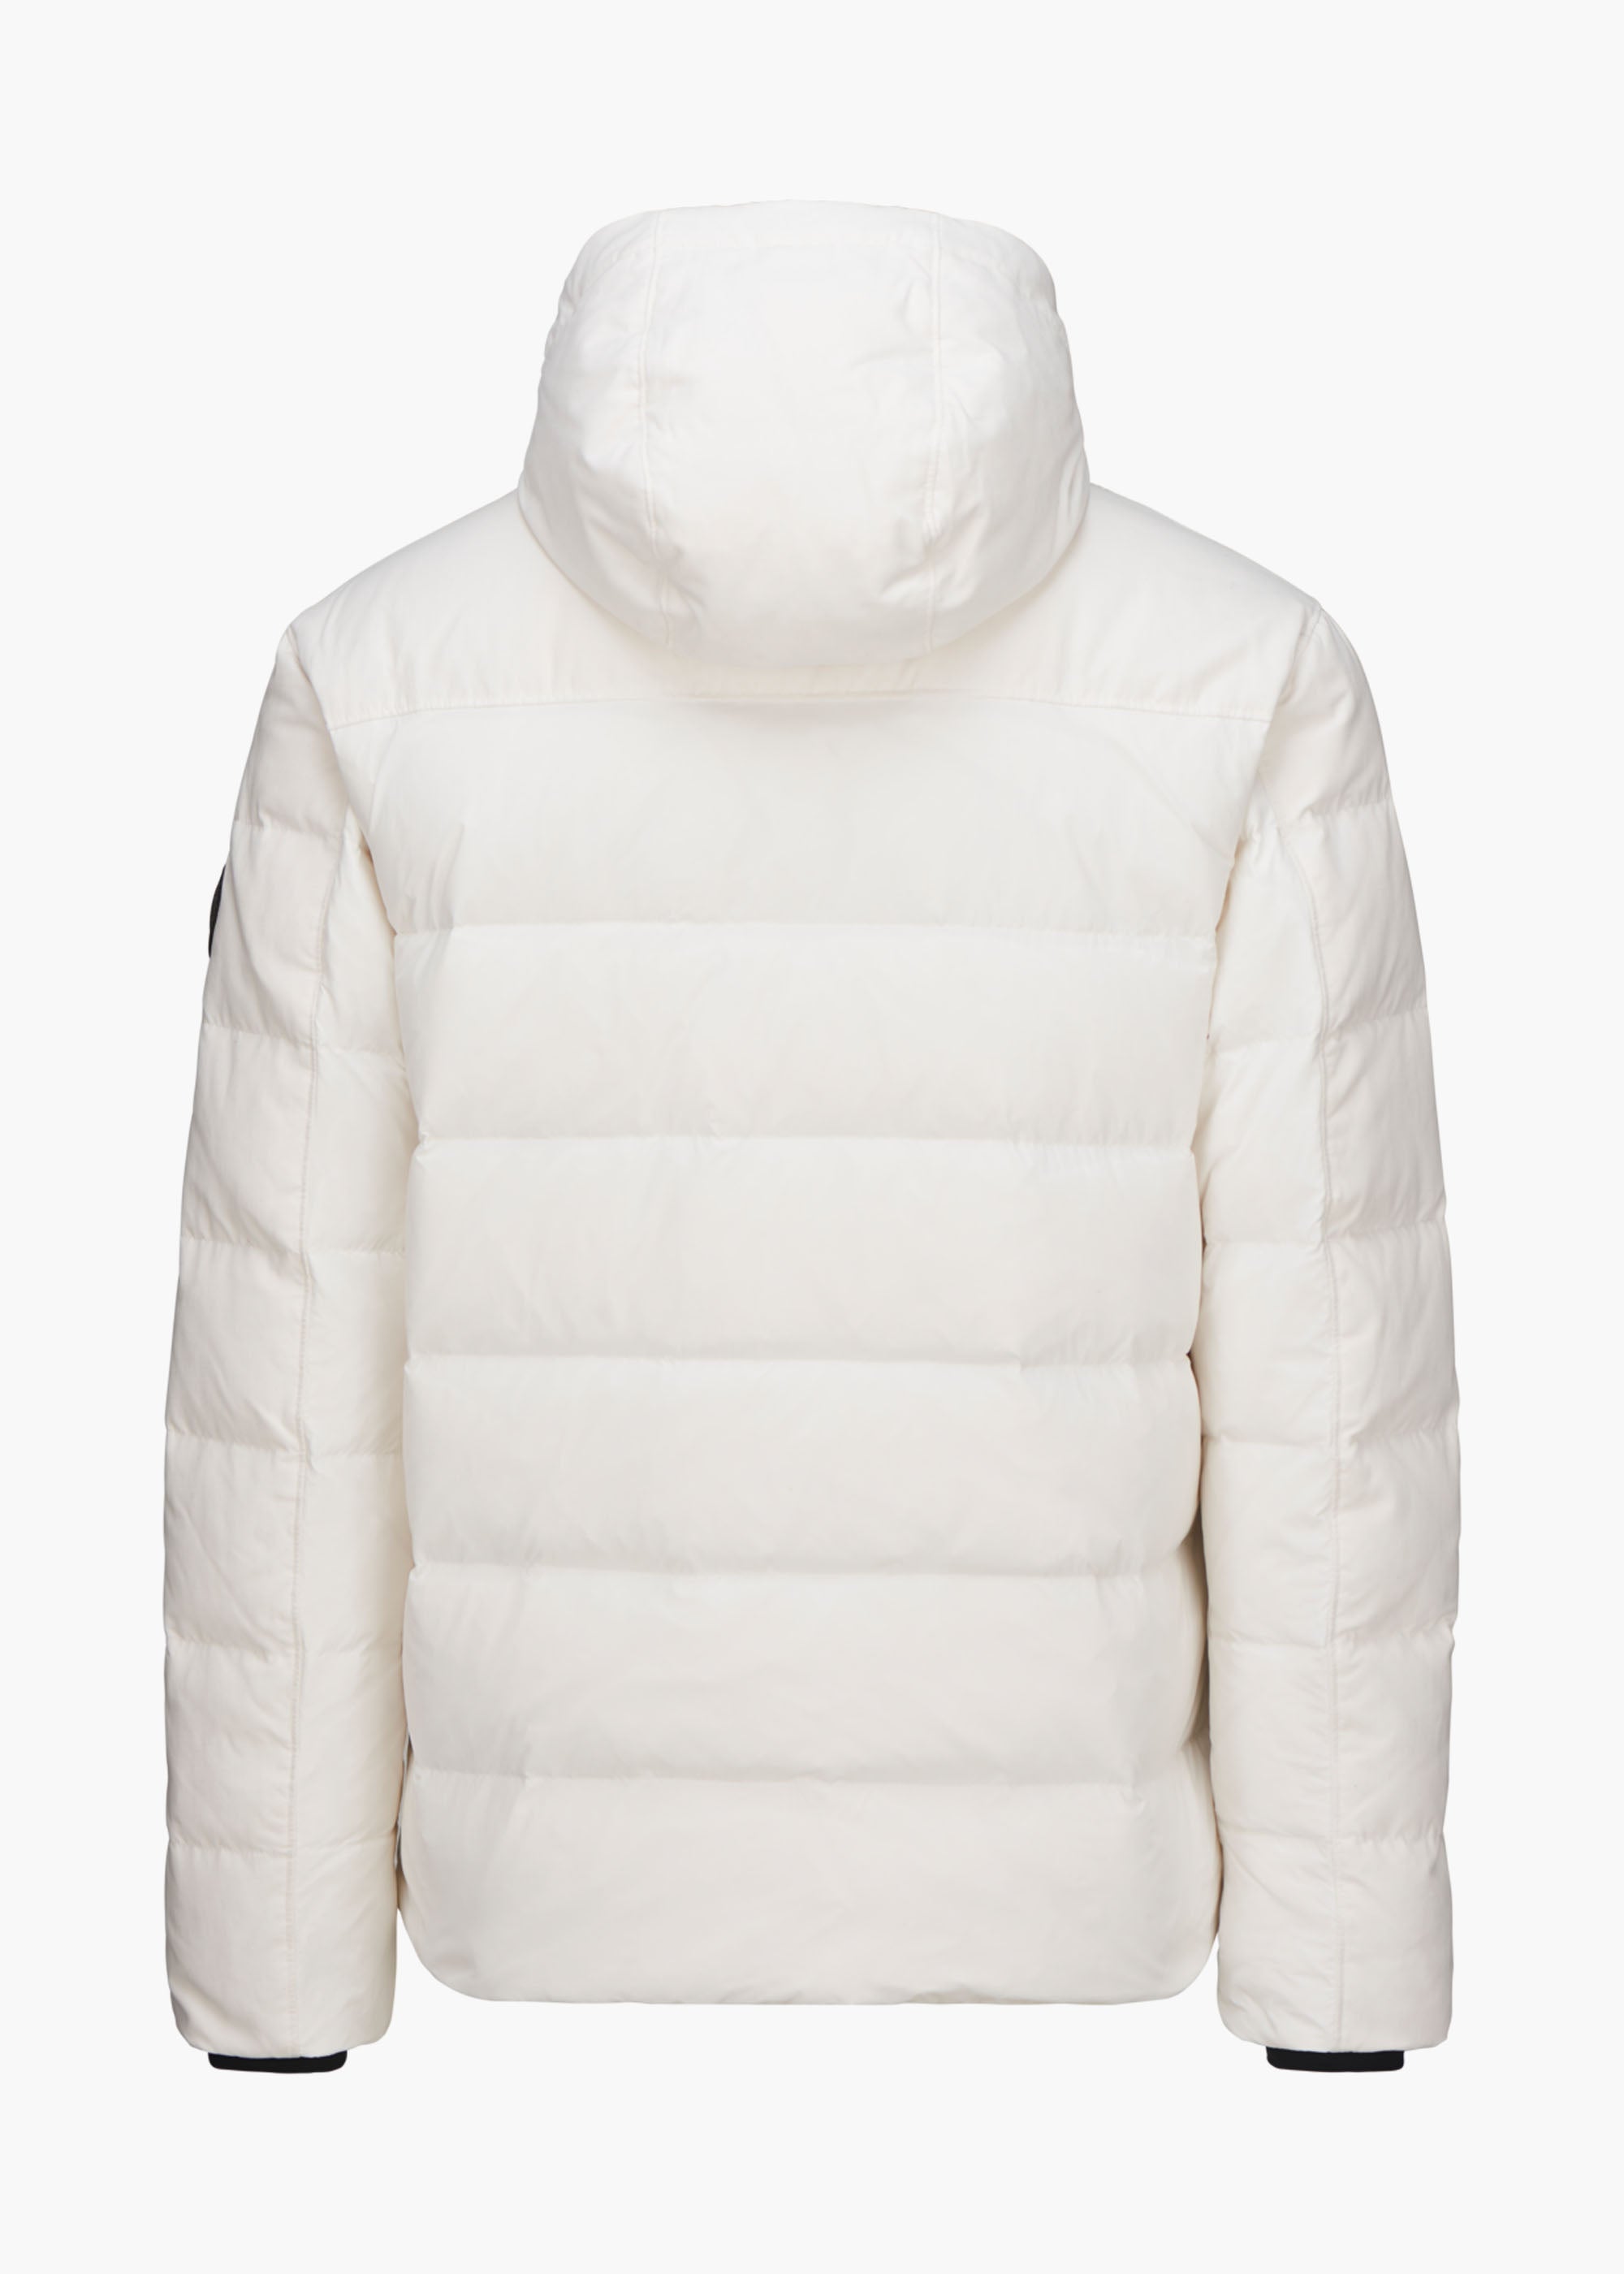 Verbier Jacket - background::white,variant::White